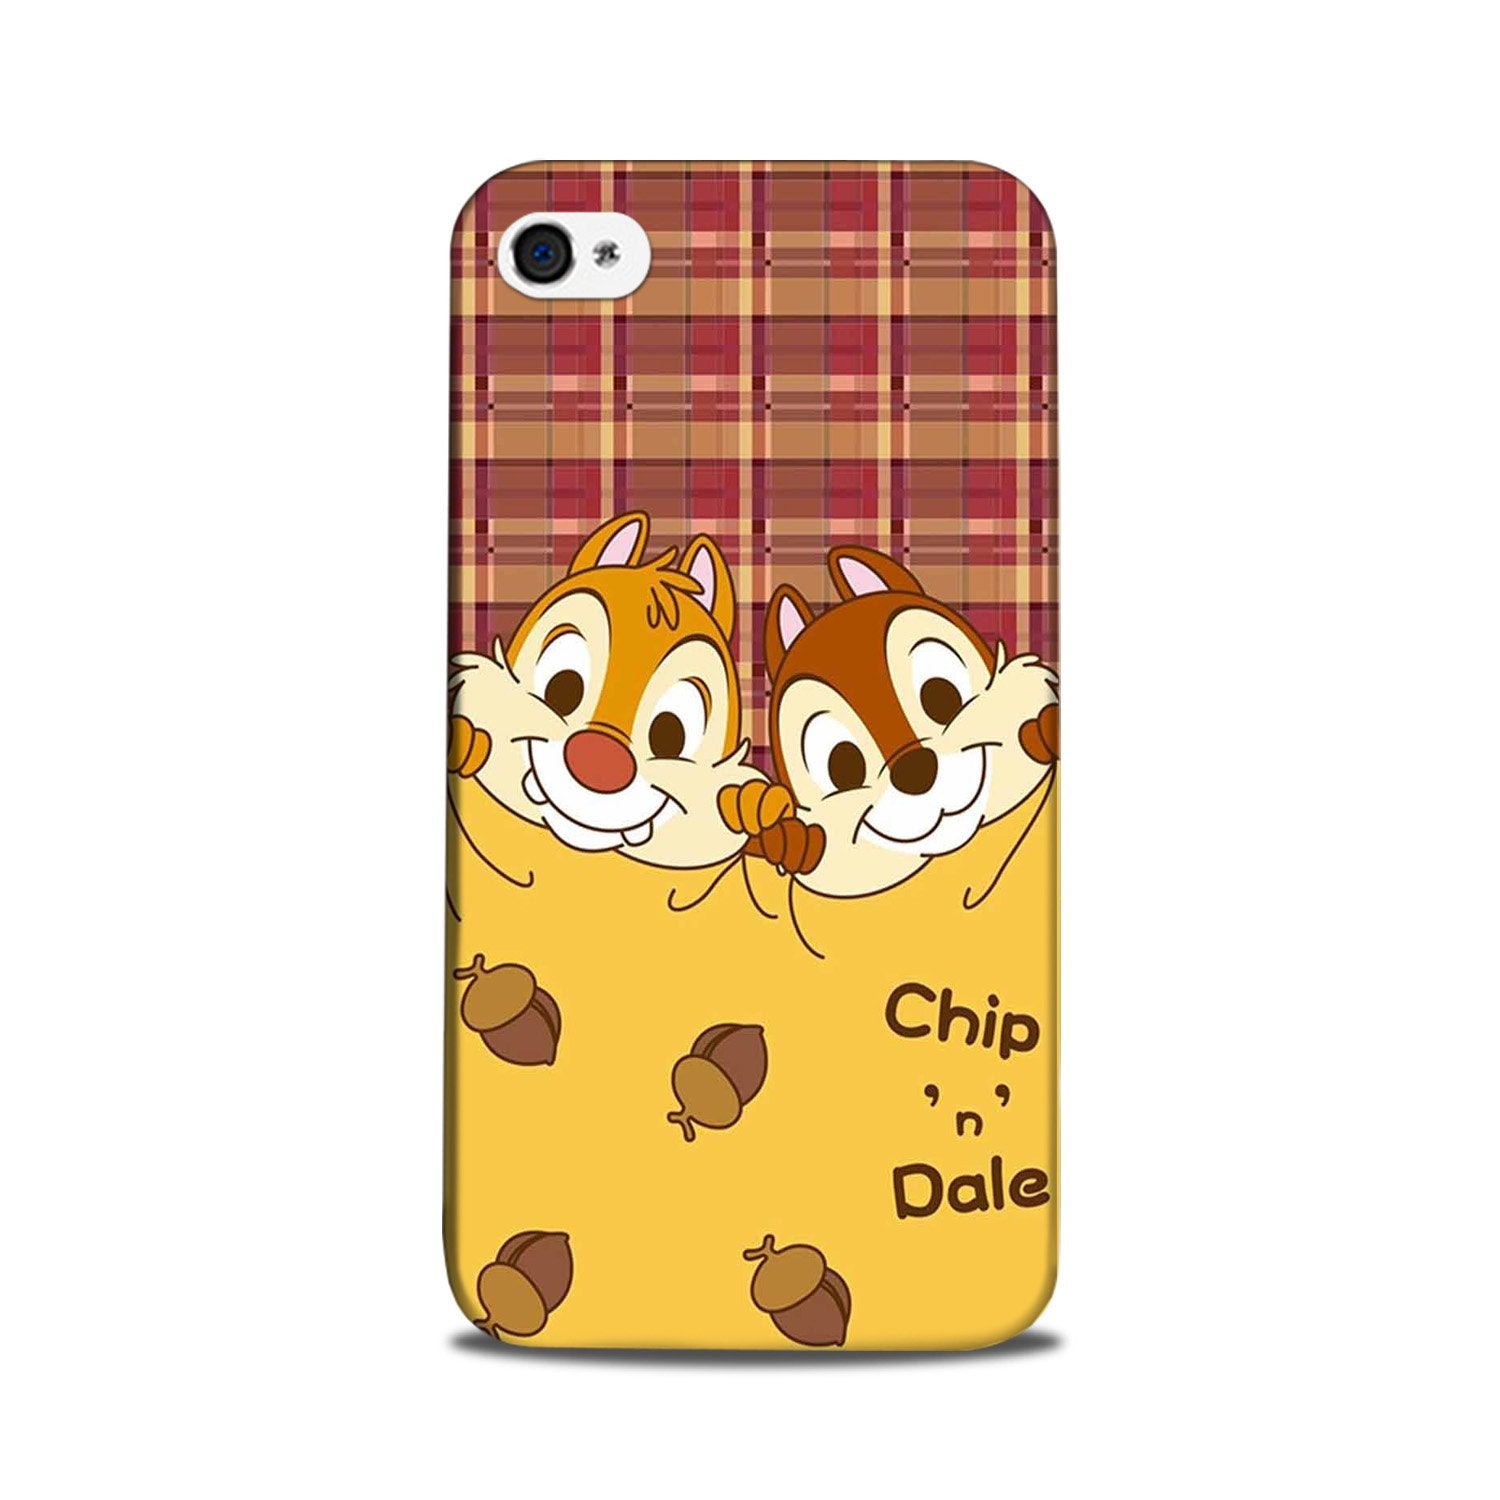 Chip n Dale Mobile Back Case for iPhone 5/ 5s(Design - 342)